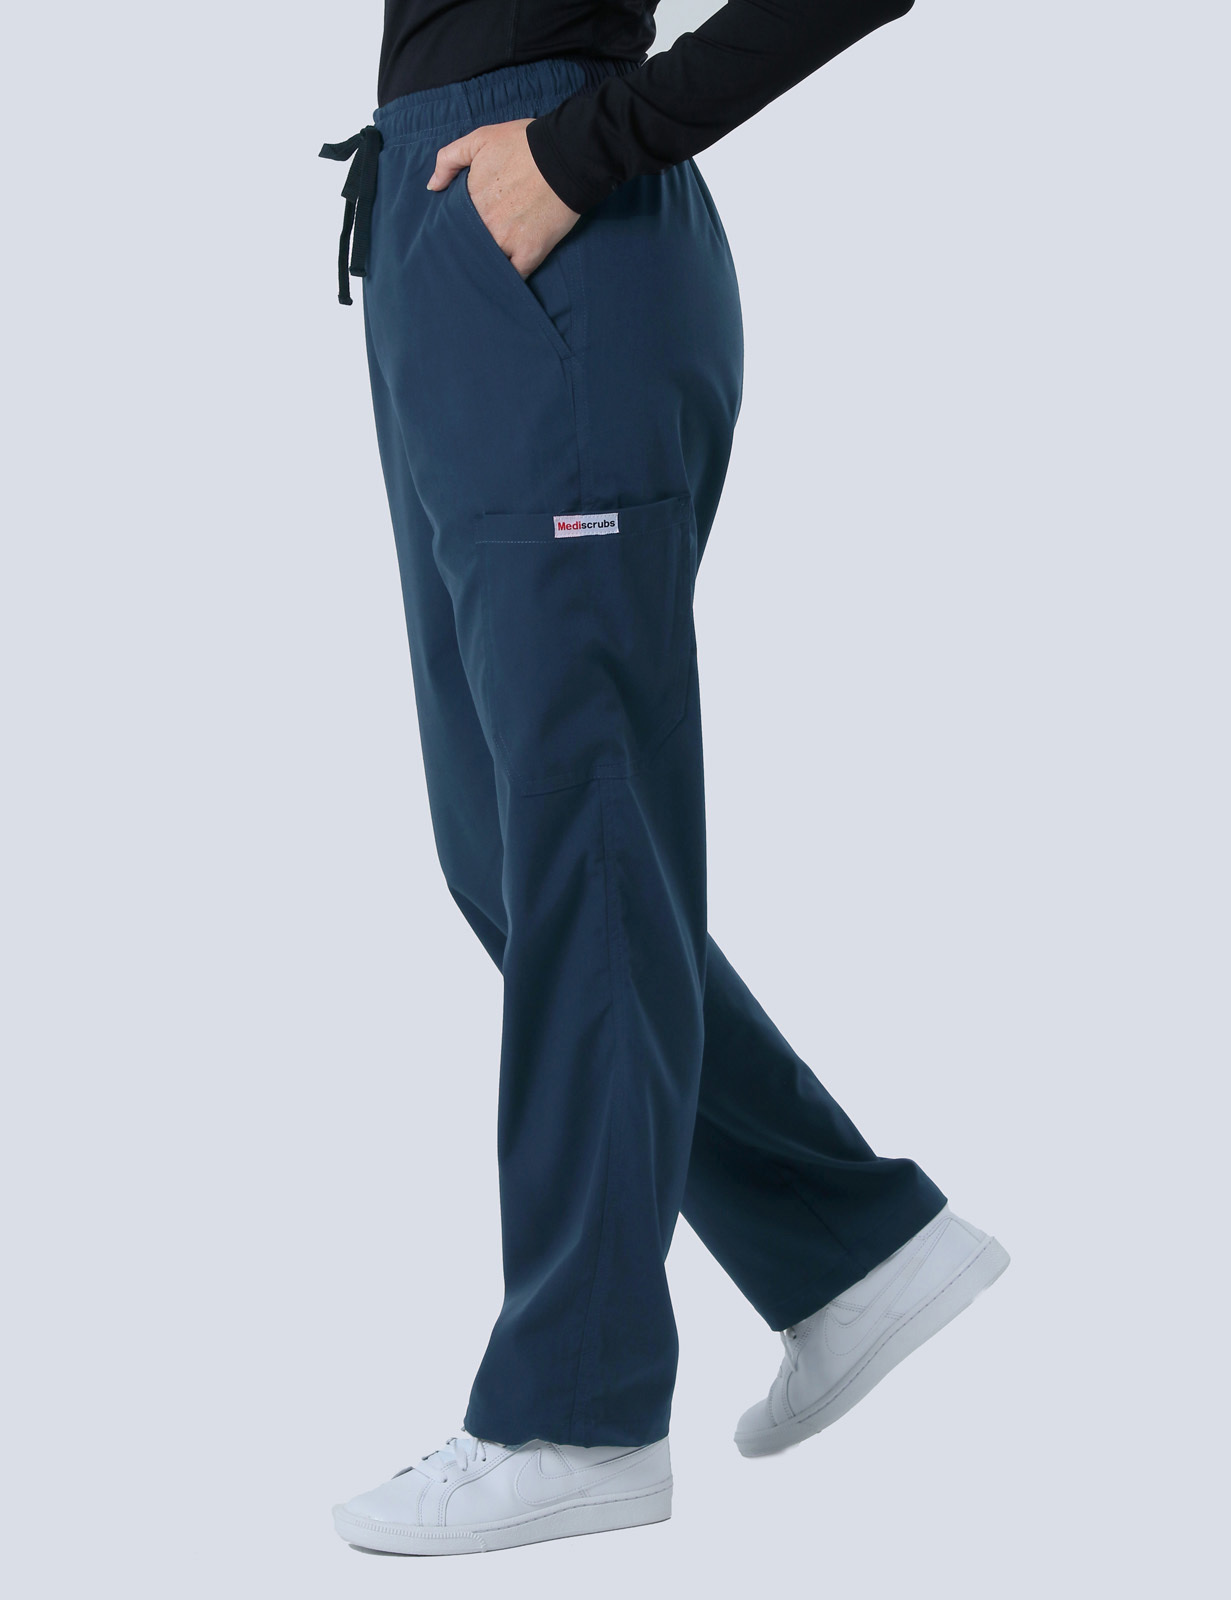 Peninsula Health - EDW/SSSU (4 Pocket Scrub Top and Cargo Pants in Navy incl Logos)